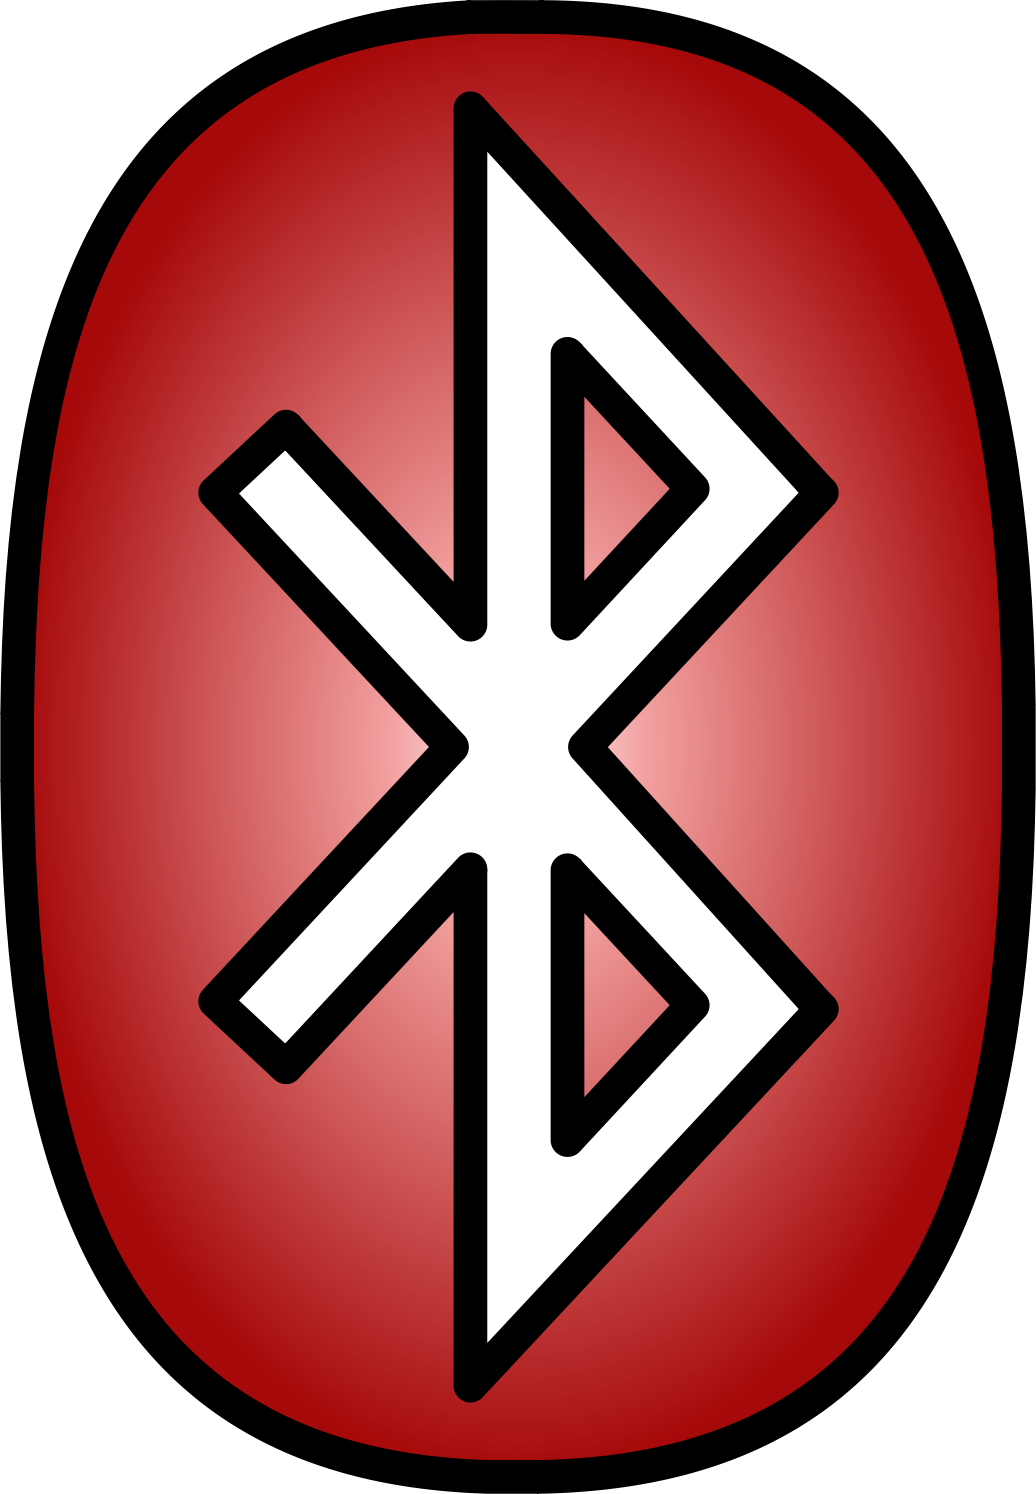 Logotipo Bluetooth